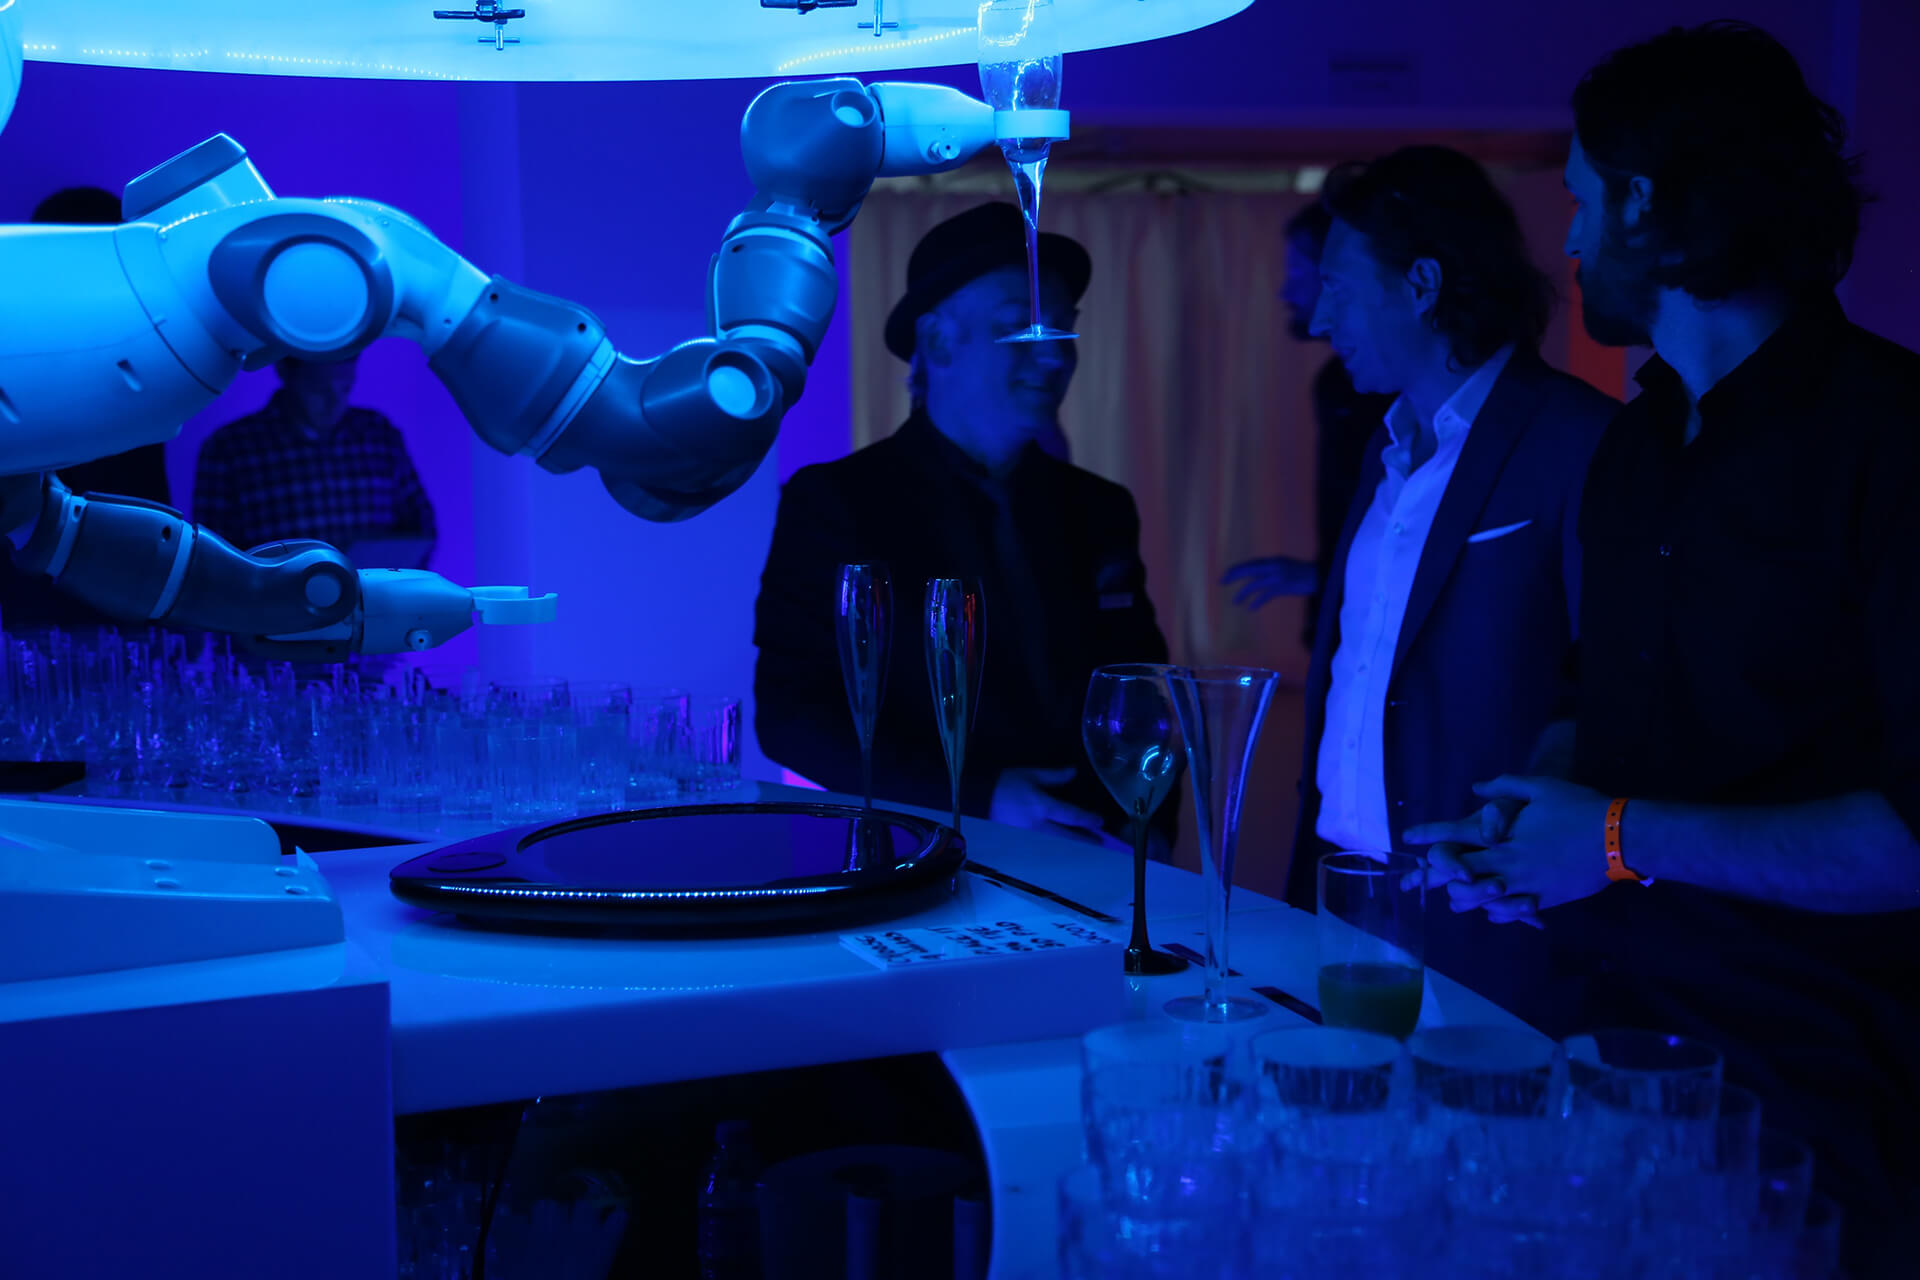 ABB YuMi robot making a cocktail